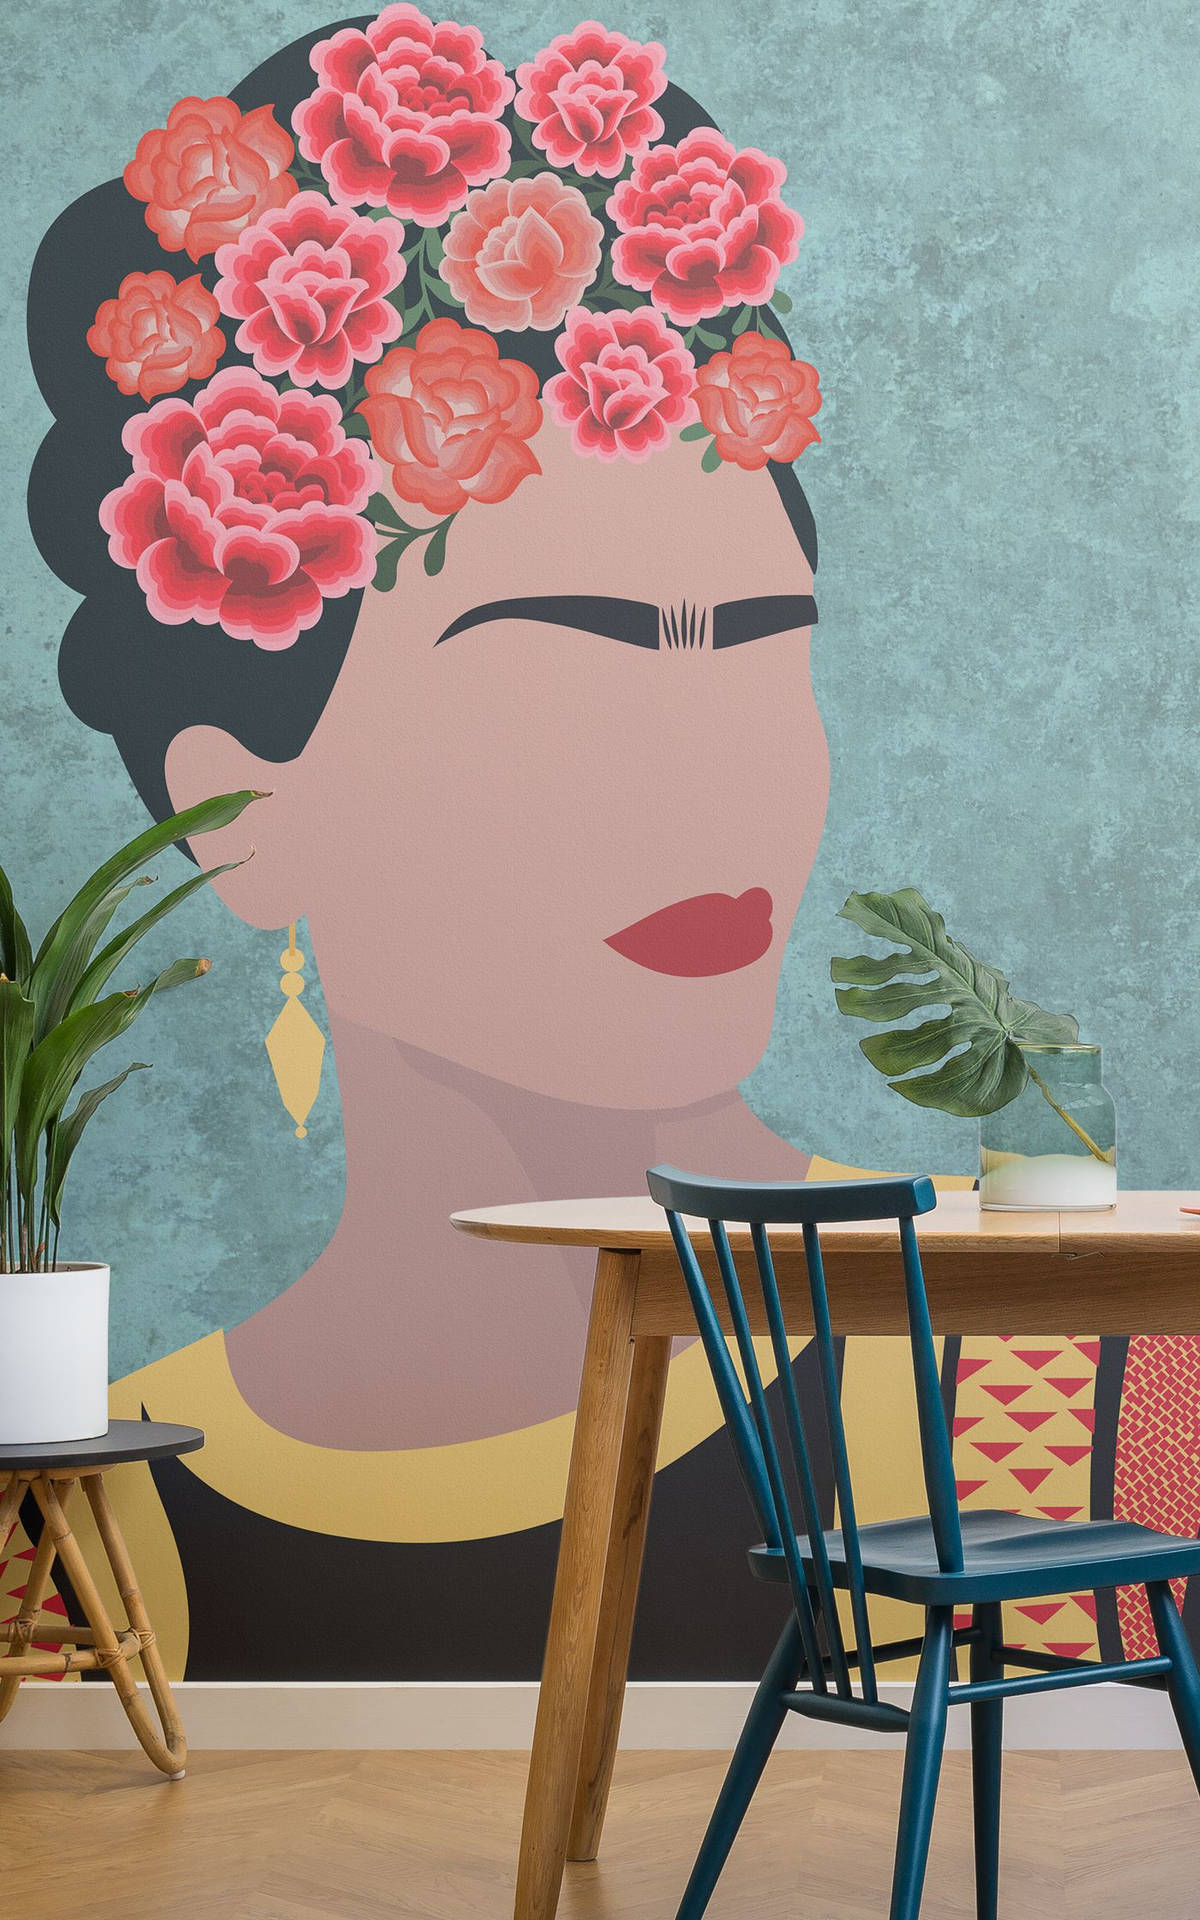 Chicano Artist Frida Kahlo Background